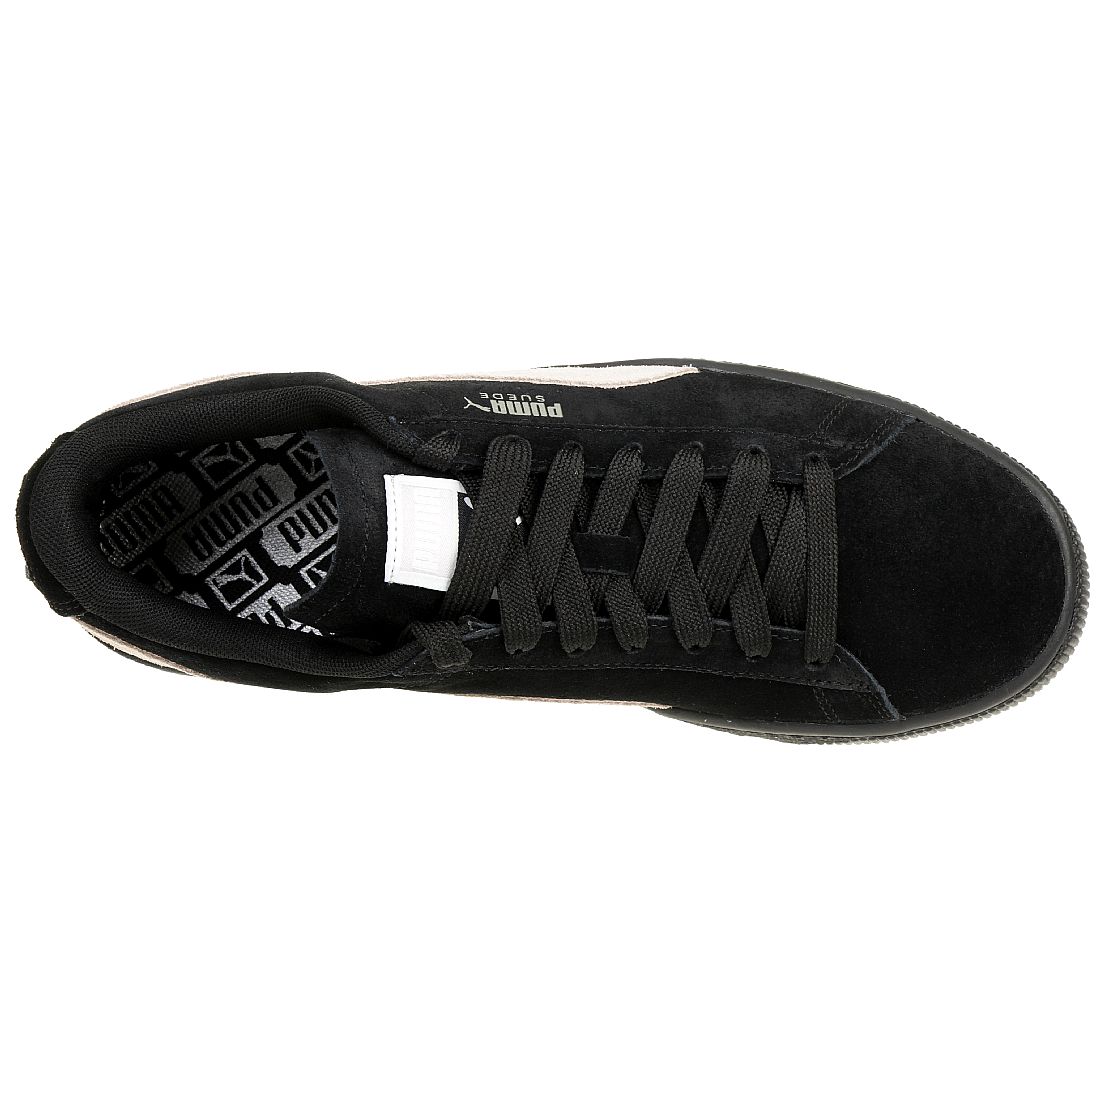 Puma Suede Classic Wn´s Damen Sneaker Schuhe 355462 66 schwarz